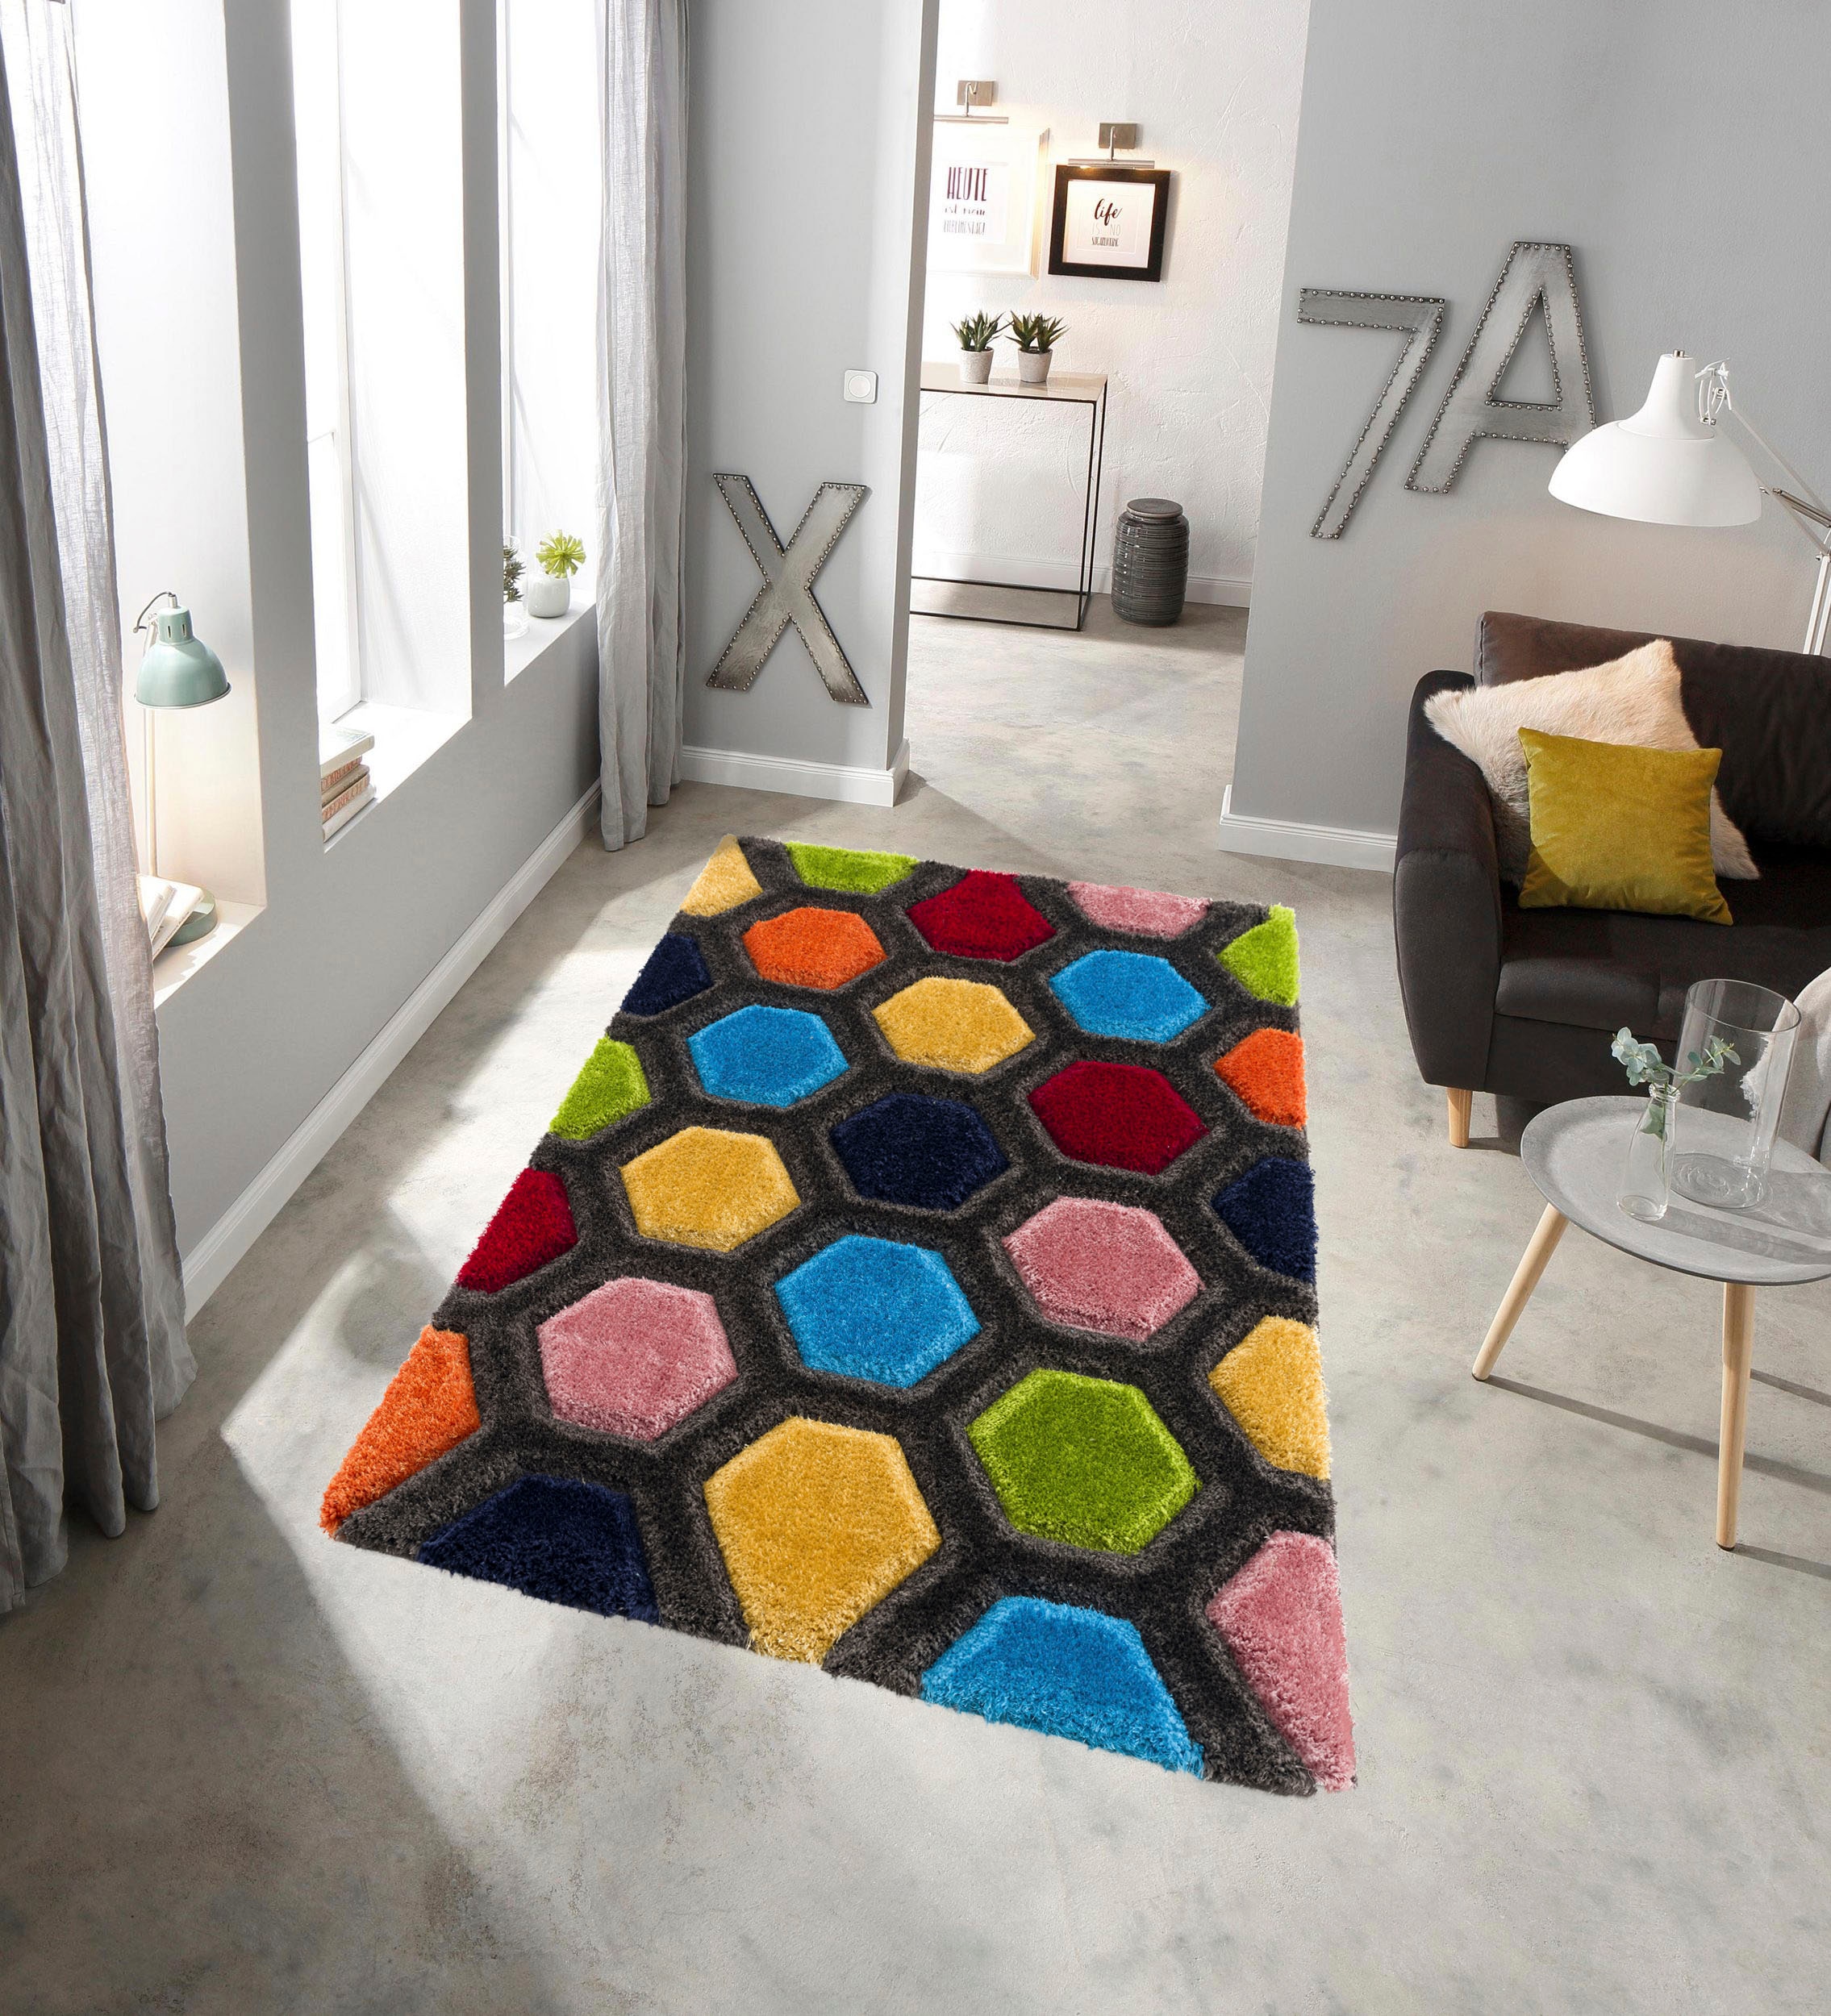 my home Hochflor-Teppich »Bras«, rechteckig, 3D-Design, modernes bunter Teppich